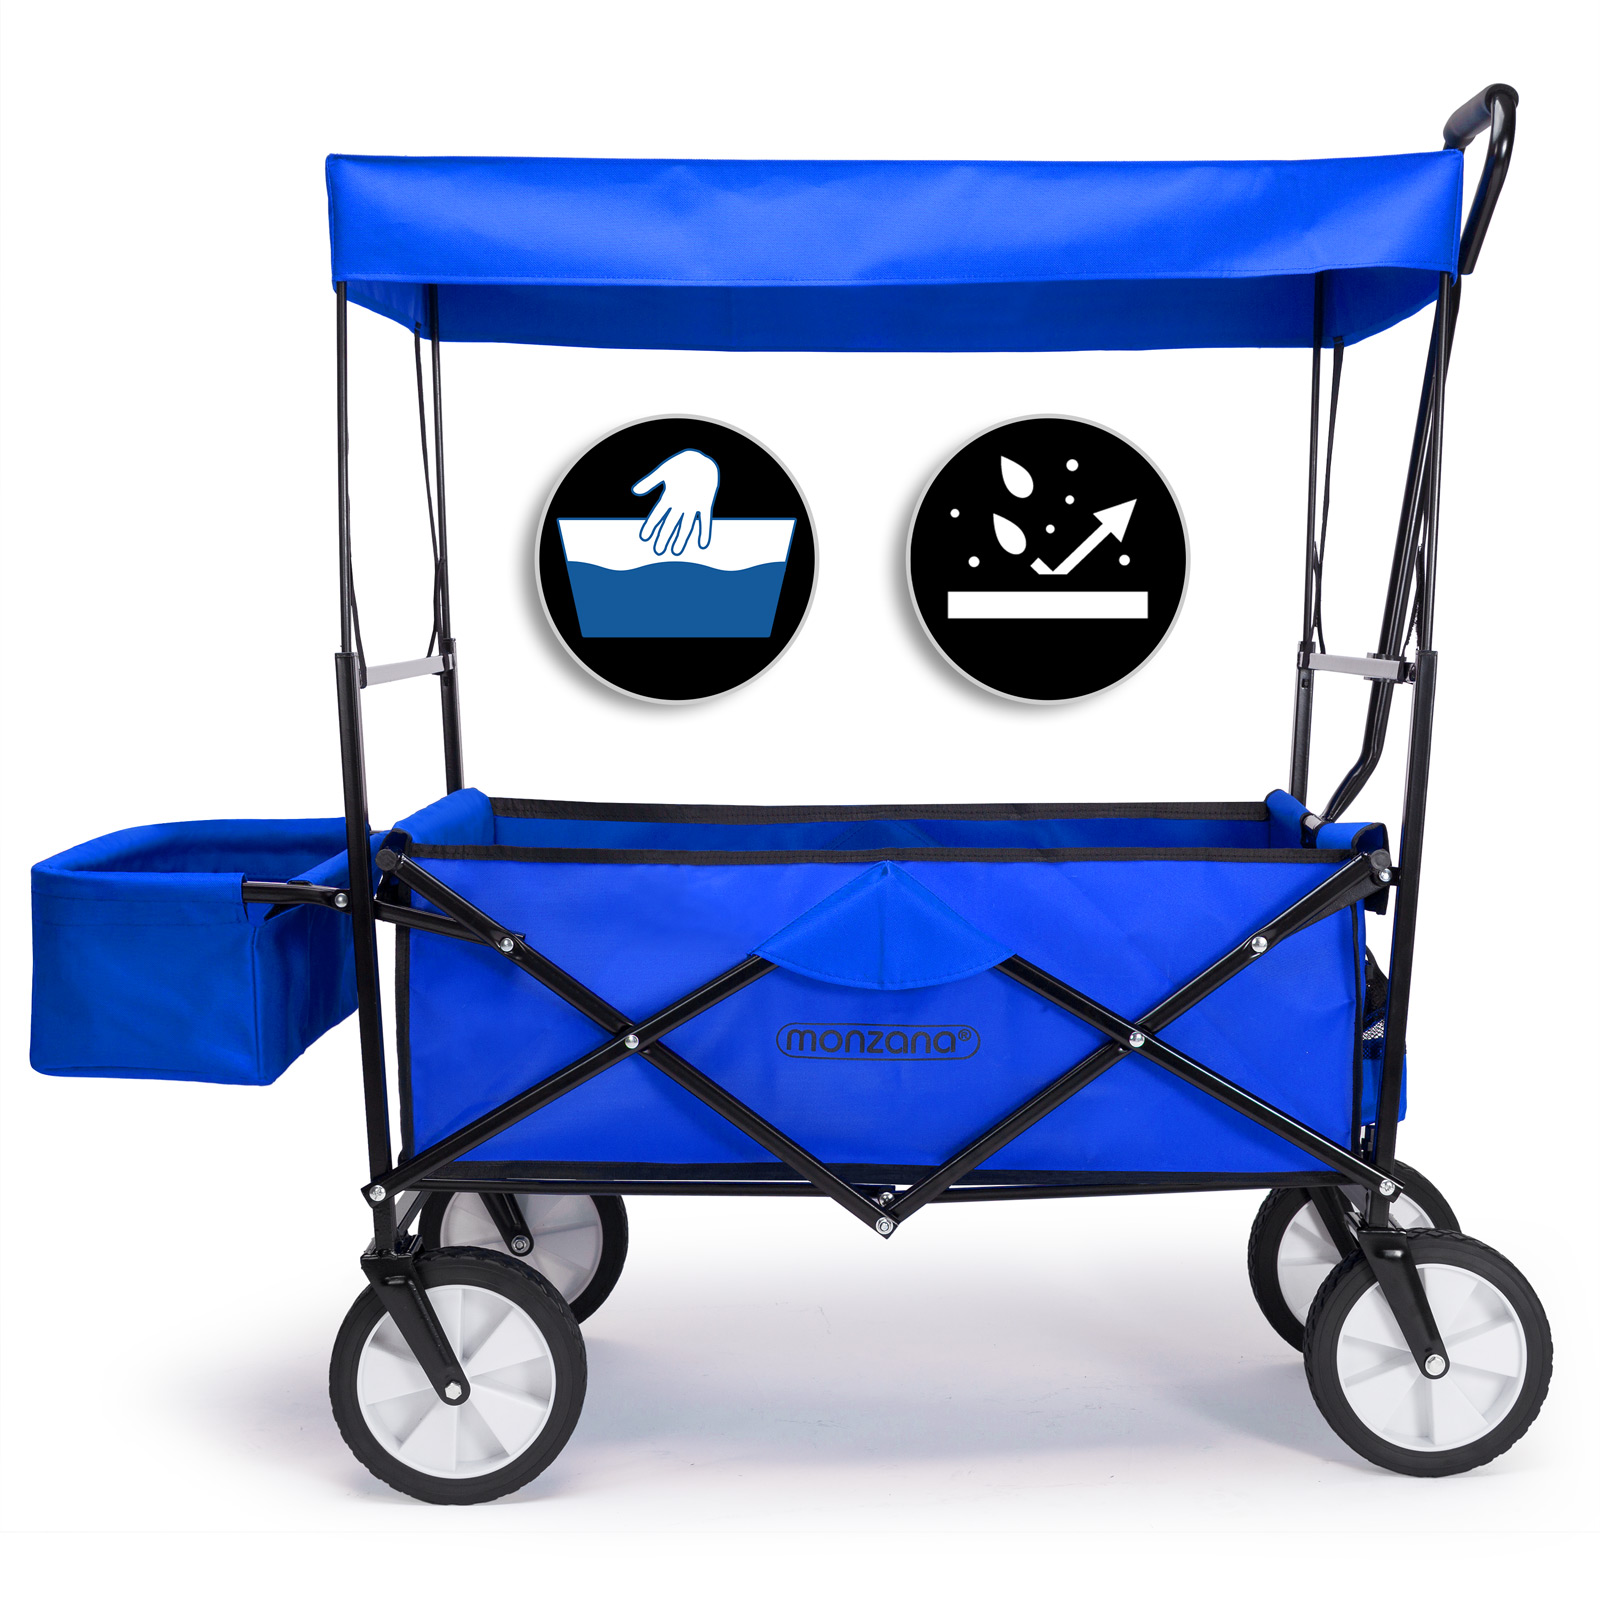 Folding Camping Festival Trolley Garden Wagon Cart 4 Wheel Blue Transport Roofed 4250525317503 